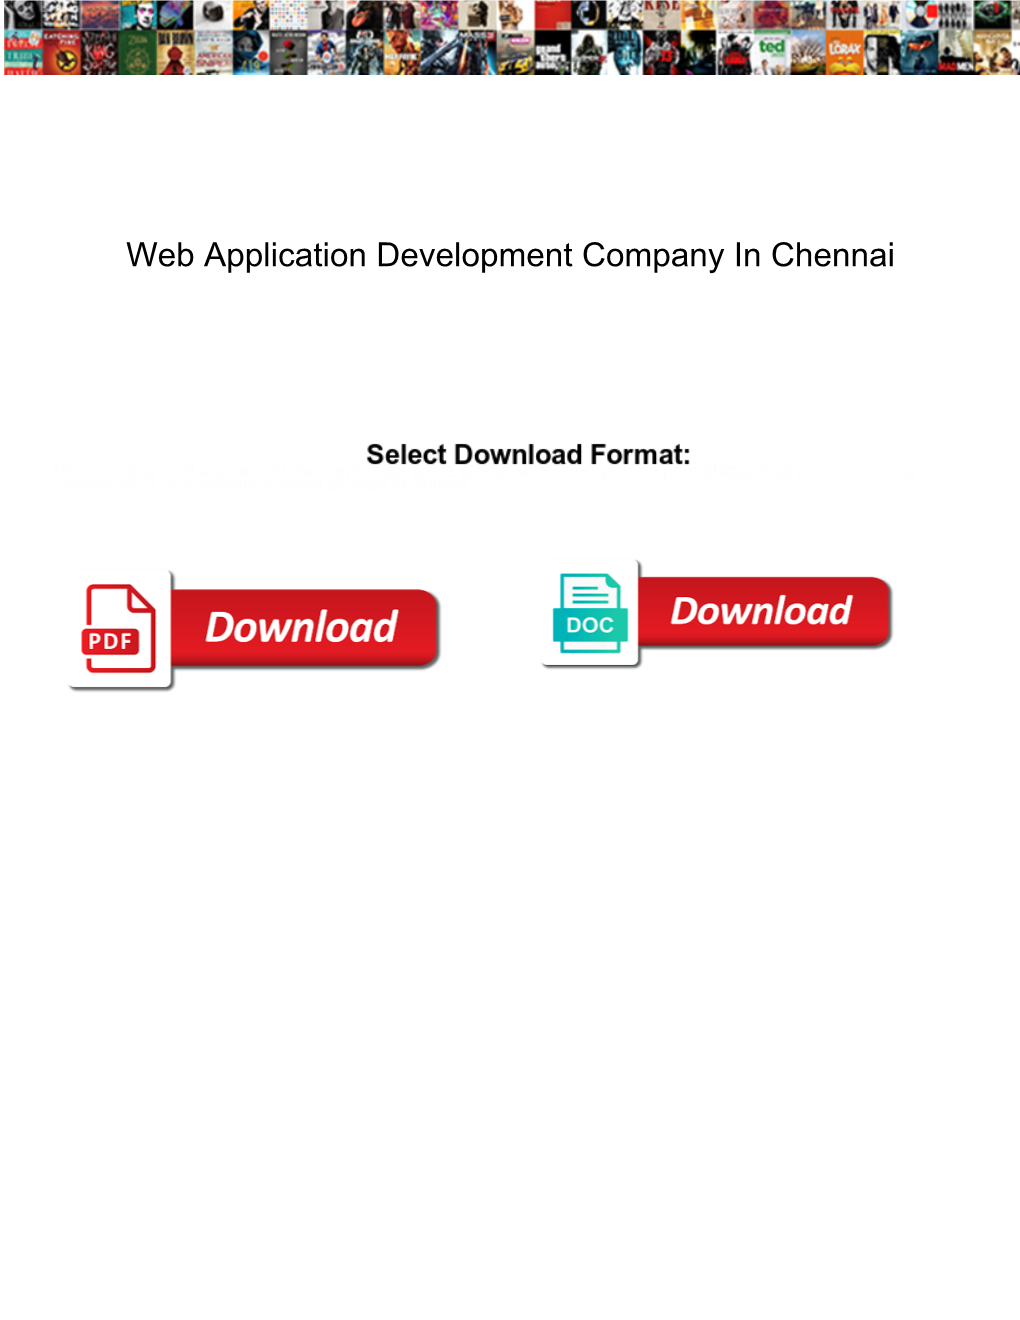 Web Application Development Company in Chennai